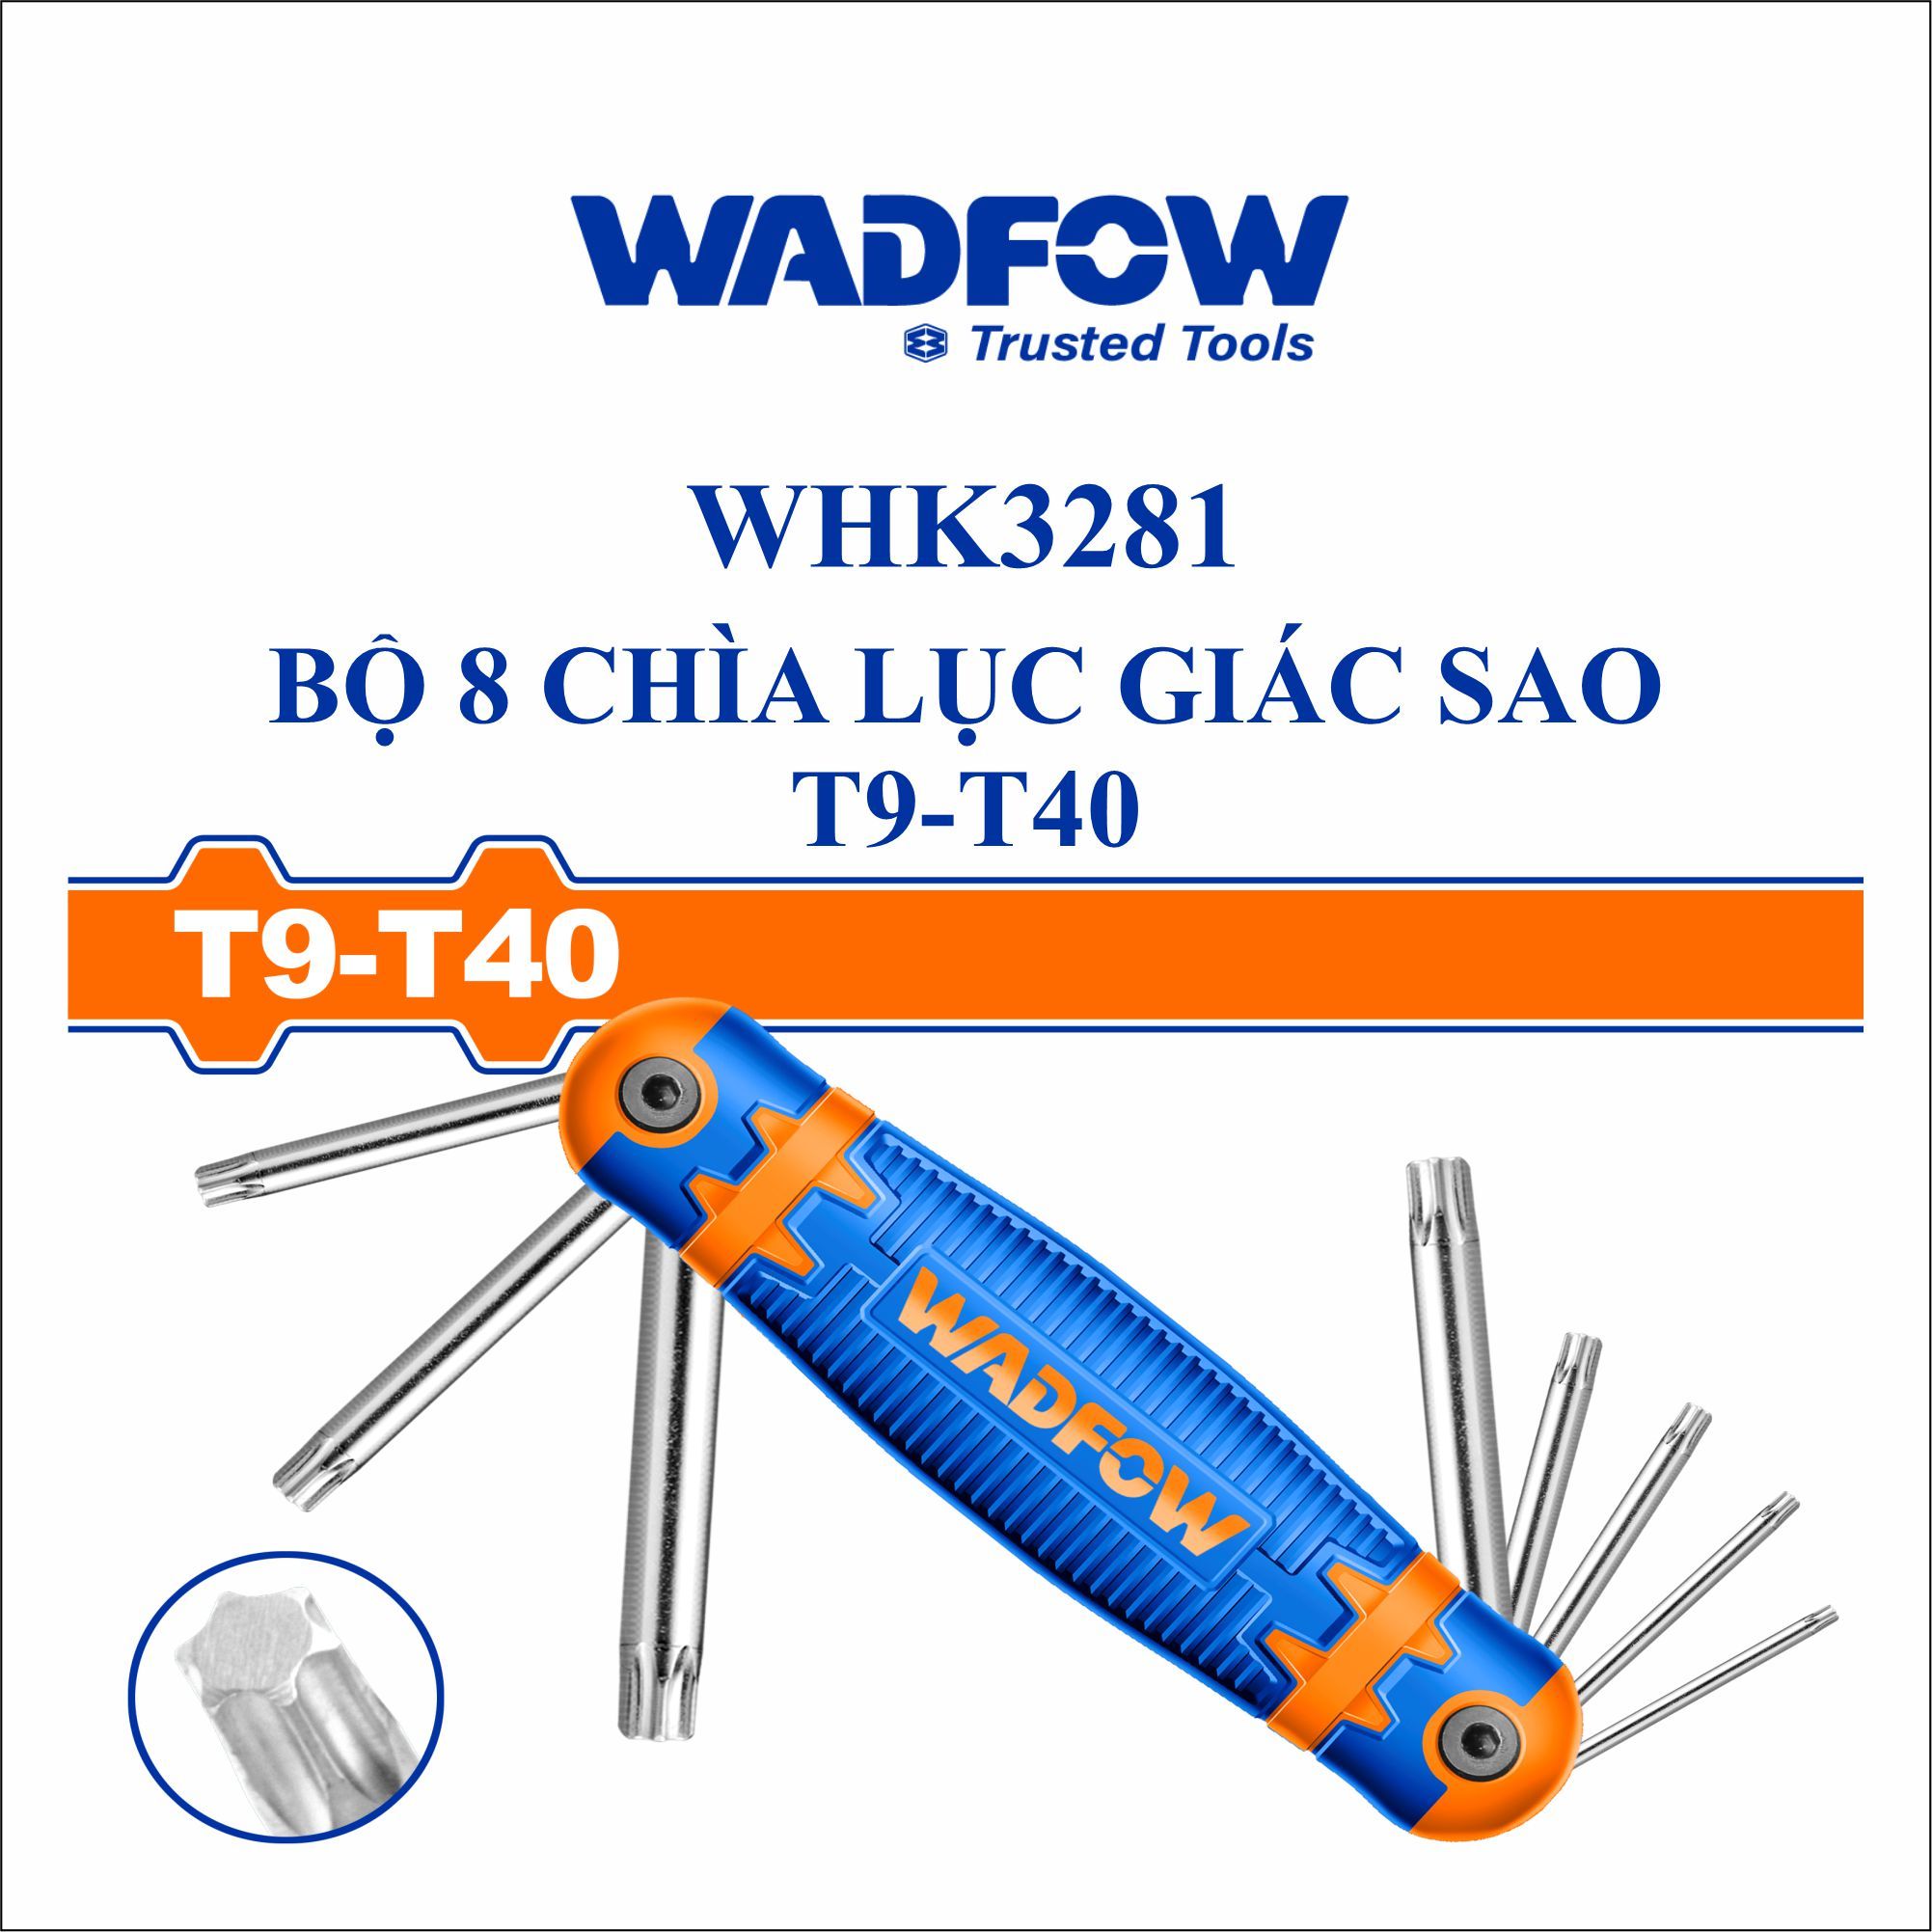  Bộ 8 chìa lục giác sao T9-T40 WADFOW WHK3281 